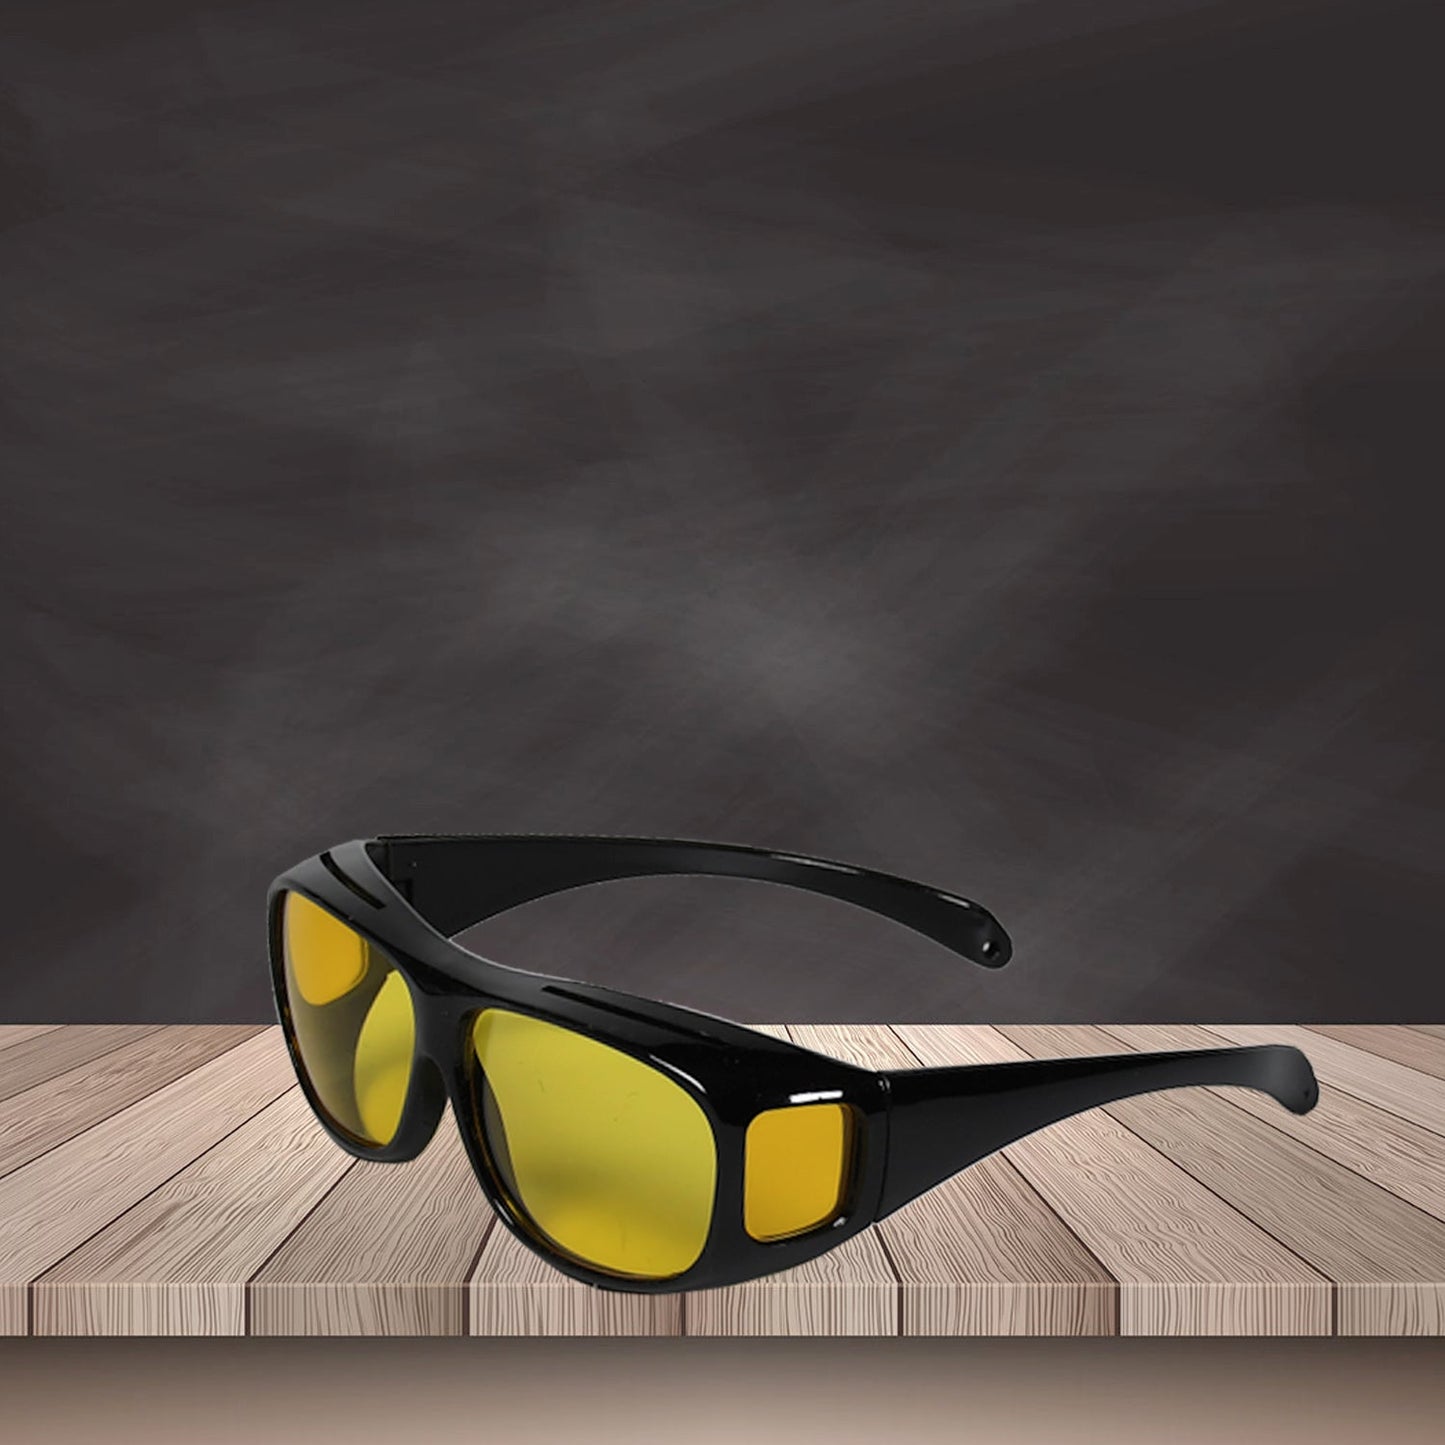 7704  Night Driving Polarized HD Vision Glasses | Anti Glare 100% UV Protected Goggles | Night Bike Riding Car driving Glasses For Men & Women Use DeoDap